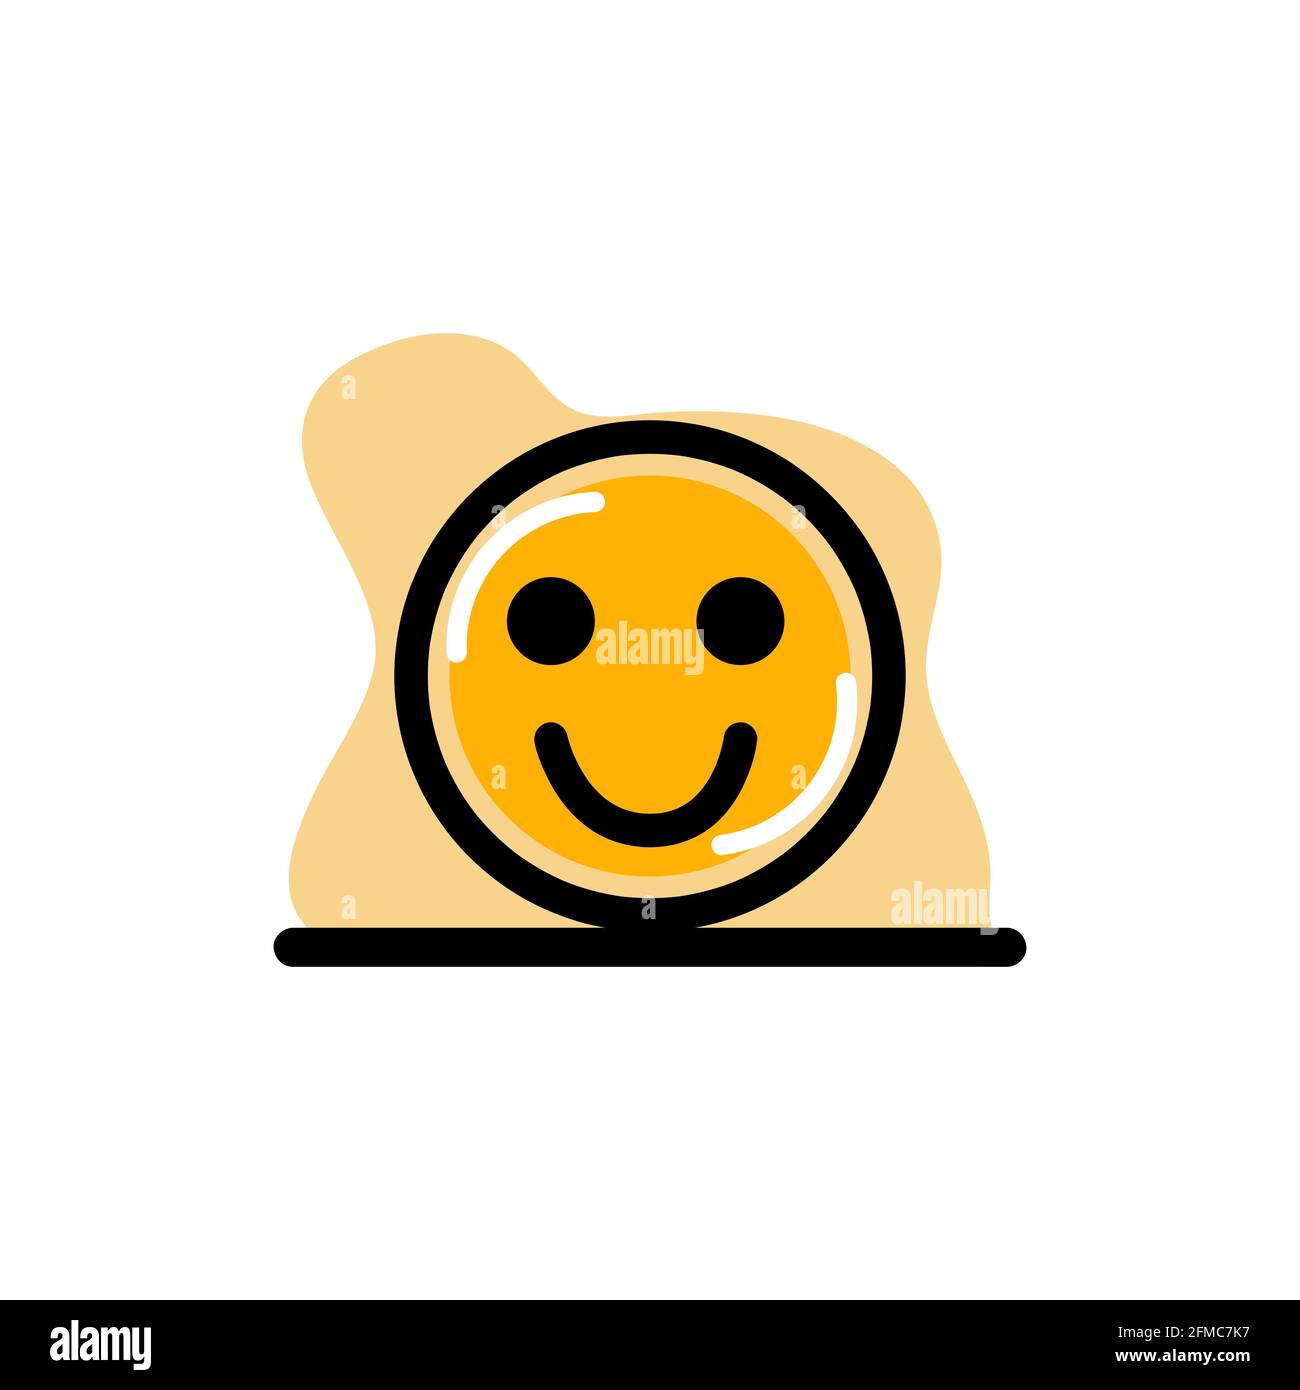 Smile Expression Concept Icon Vector Design Illustration eps10 Stock Vector